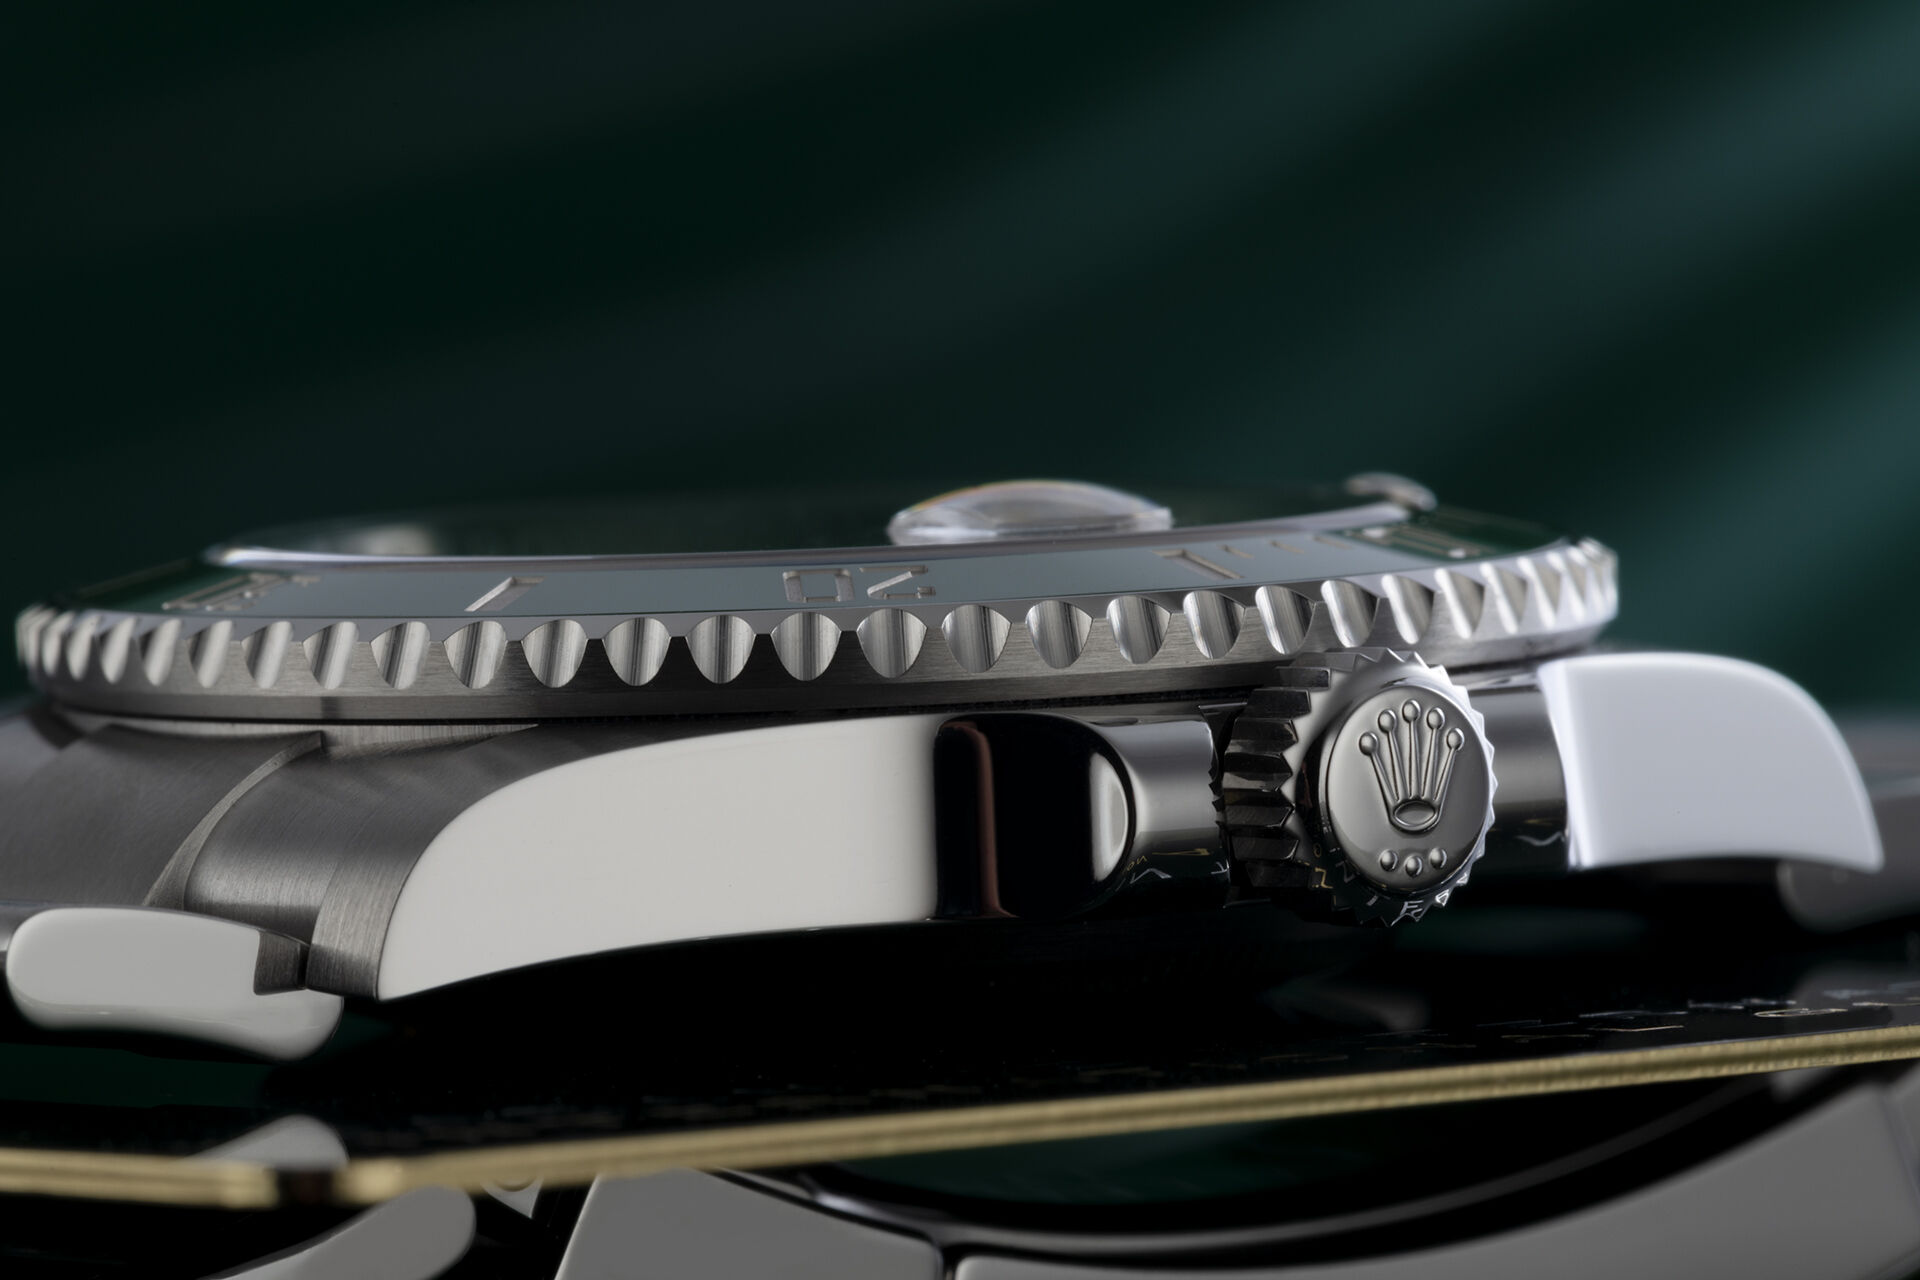 ref 126610LV | Brand New - Latest Release | Rolex Submariner Date